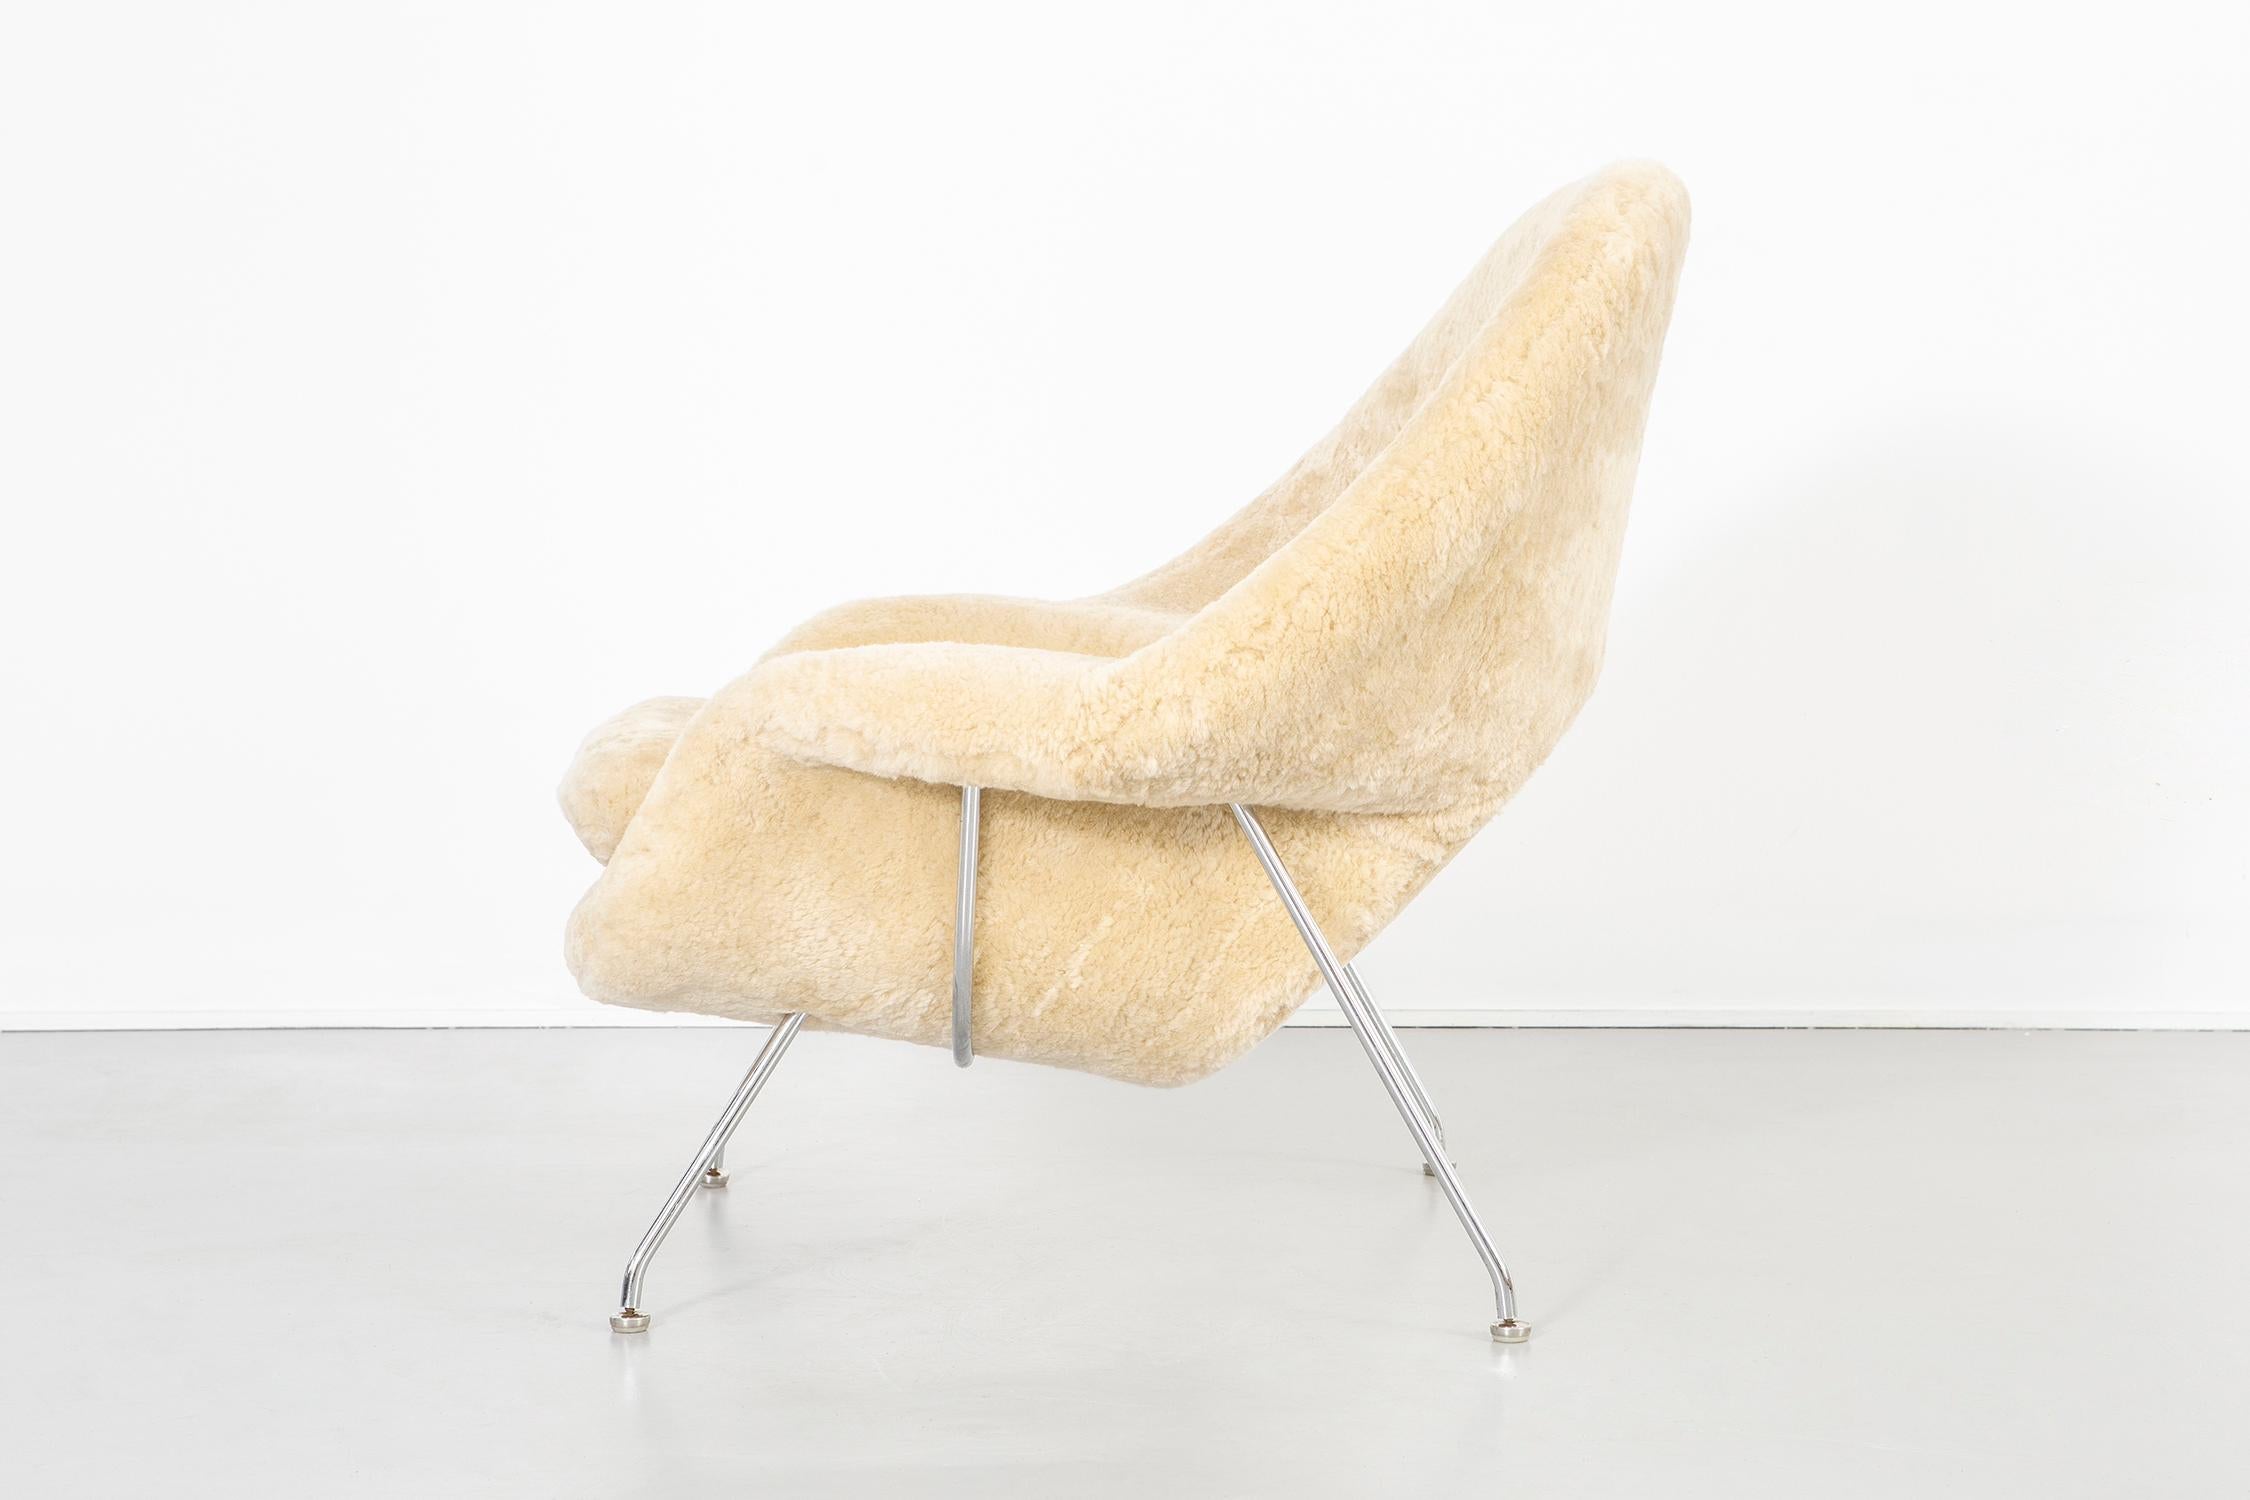 American Mid-Century Modern Eero Saarinen for Knoll Womb Chair Reupholstered in Shearling